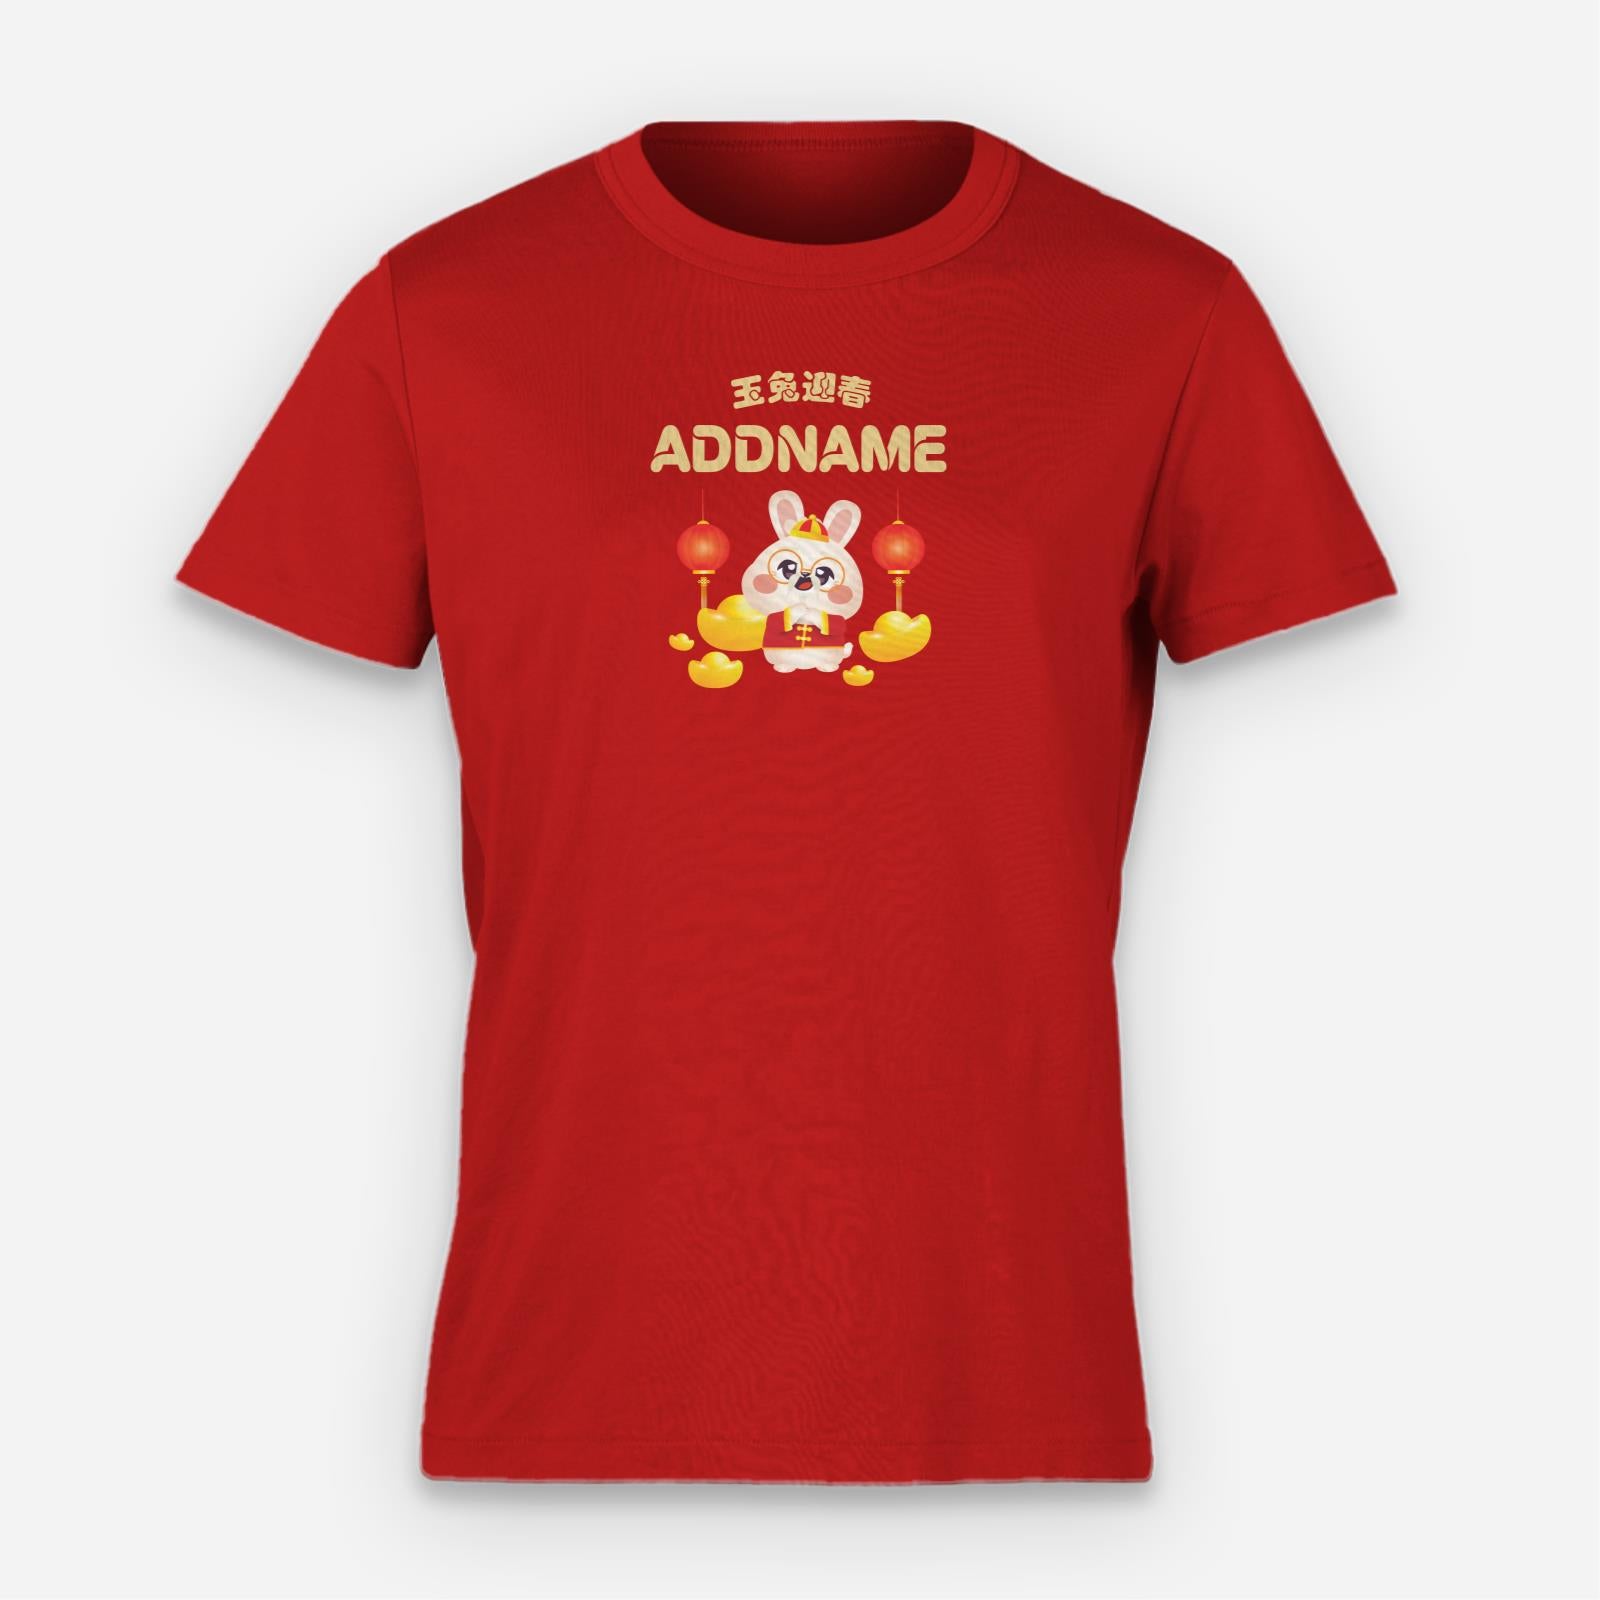 Cny Rabbit Family - Grandpa Rabbit Slim Fit Women Tee Shirt with English Personalization